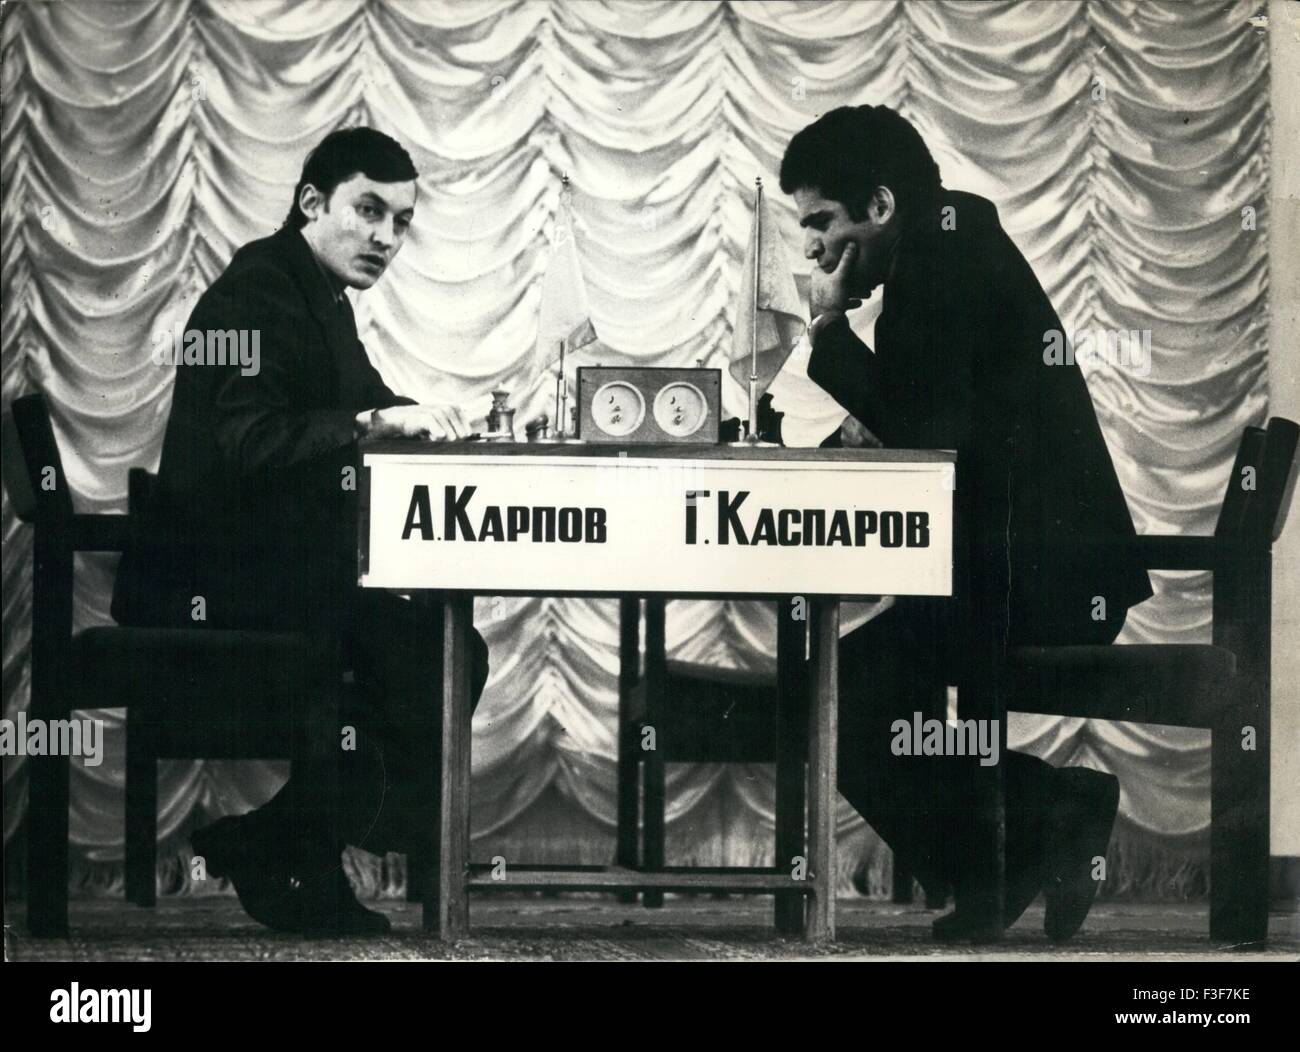 Karpov kasparov hi-res stock photography and images - Alamy